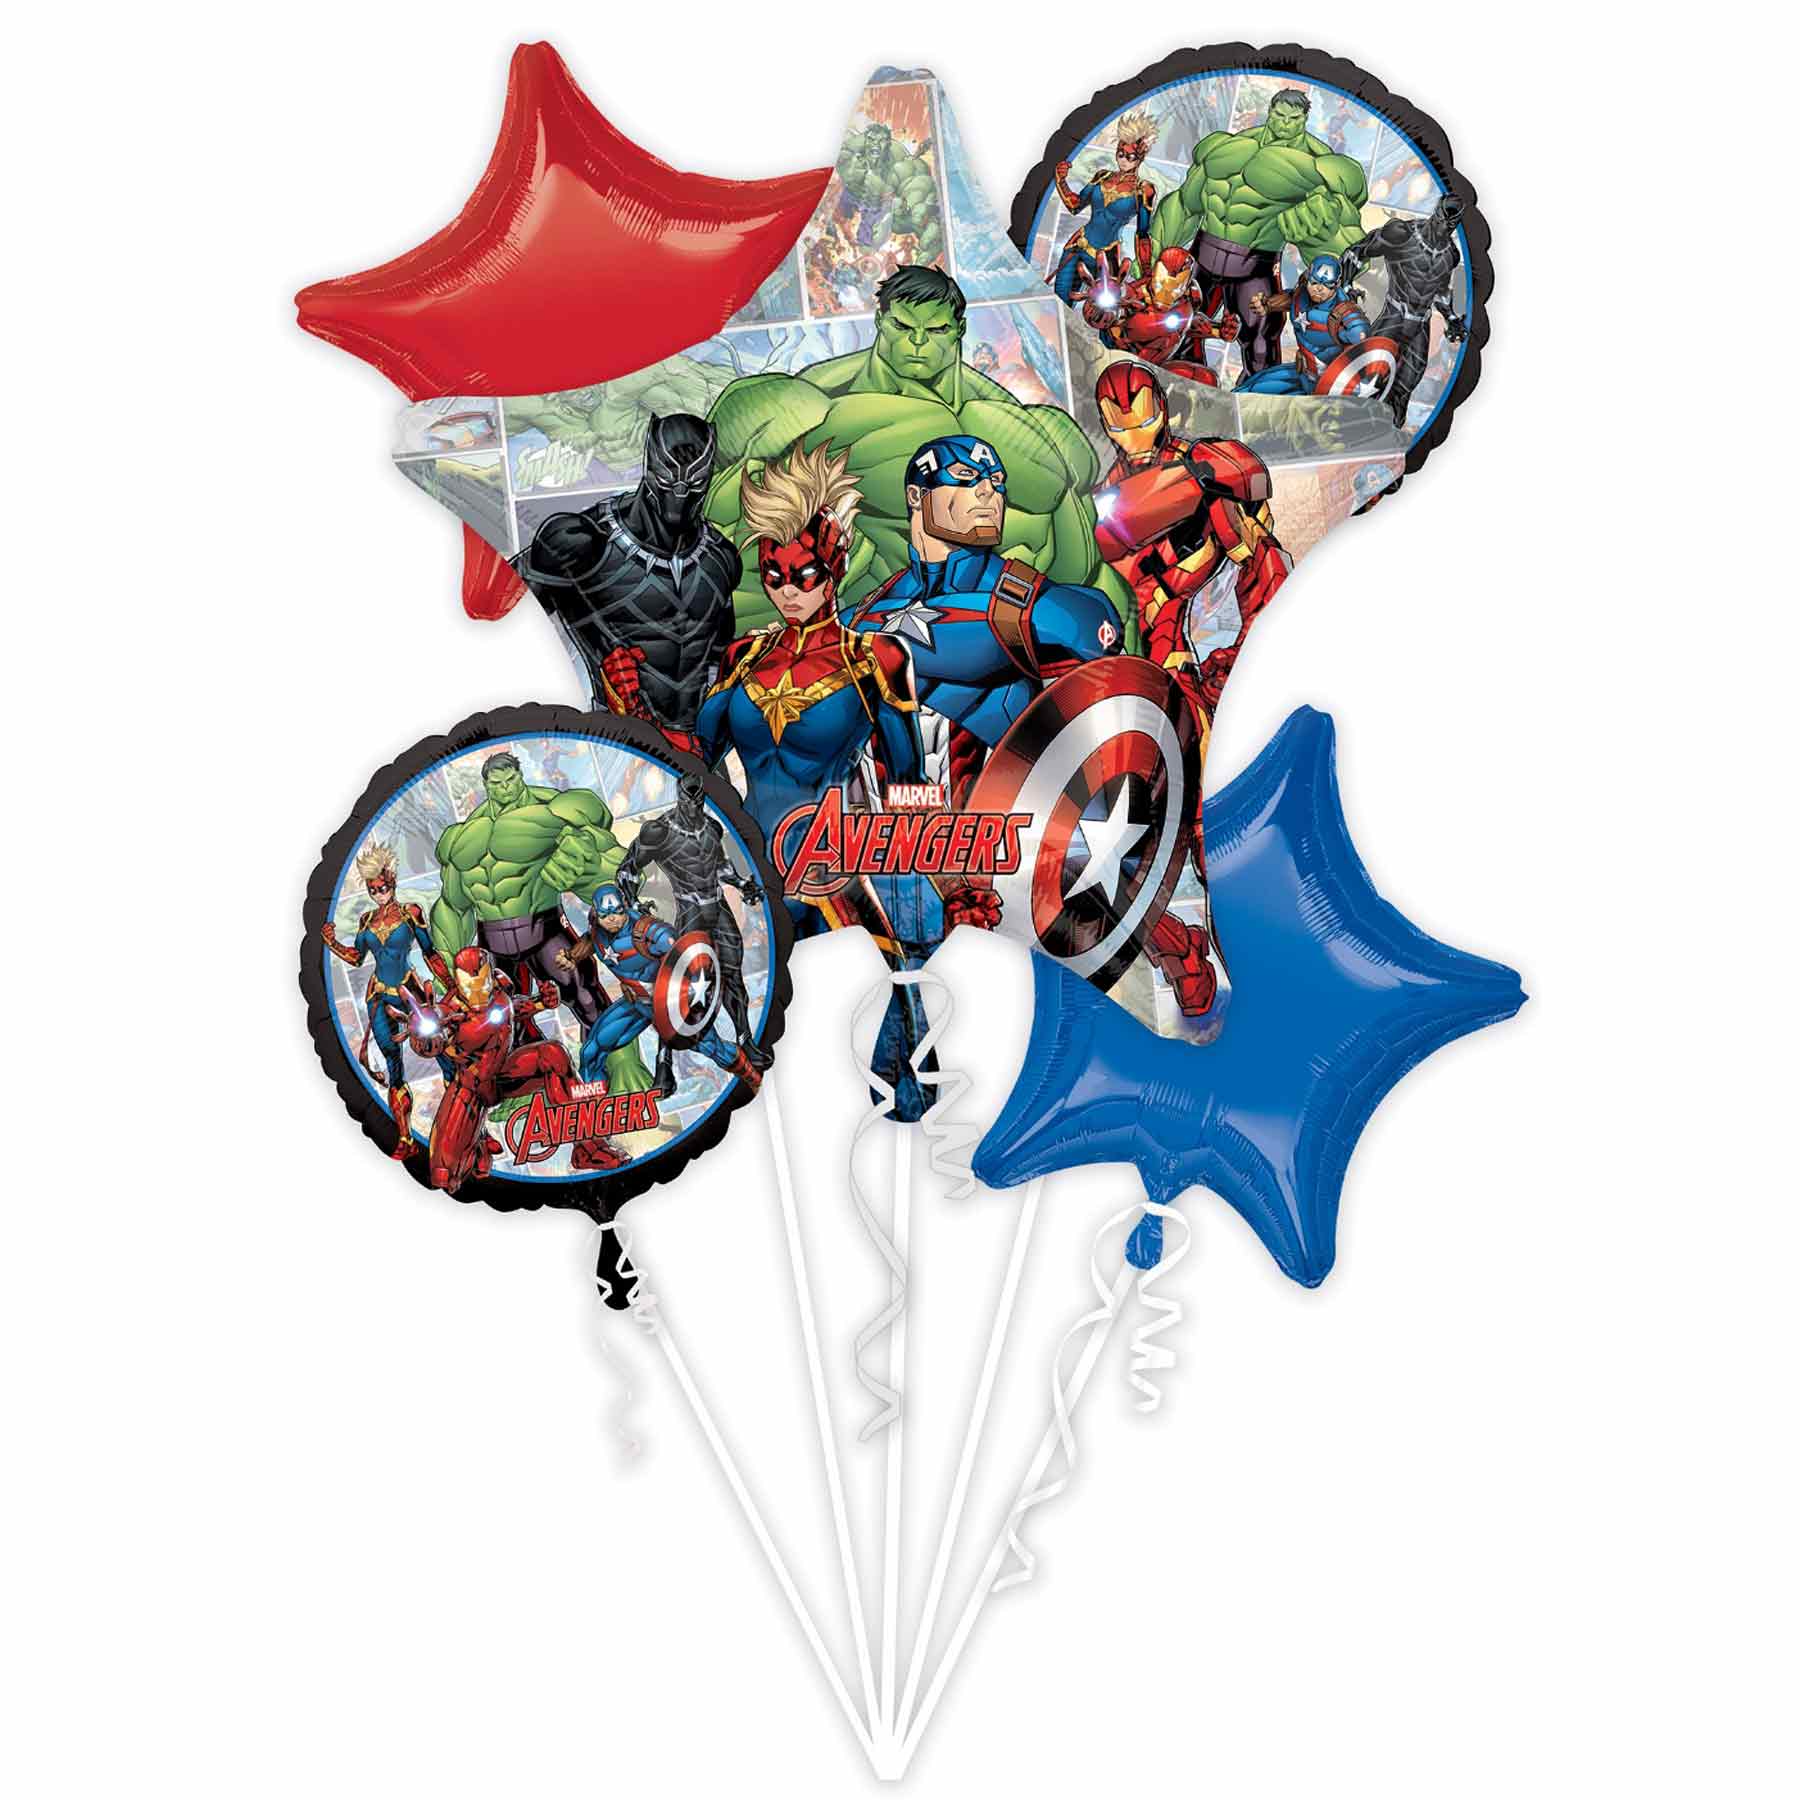 Avengers Marvel Powers Unite Balloon Bouquet 5pcs Balloons & Streamers - Party Centre - Party Centre